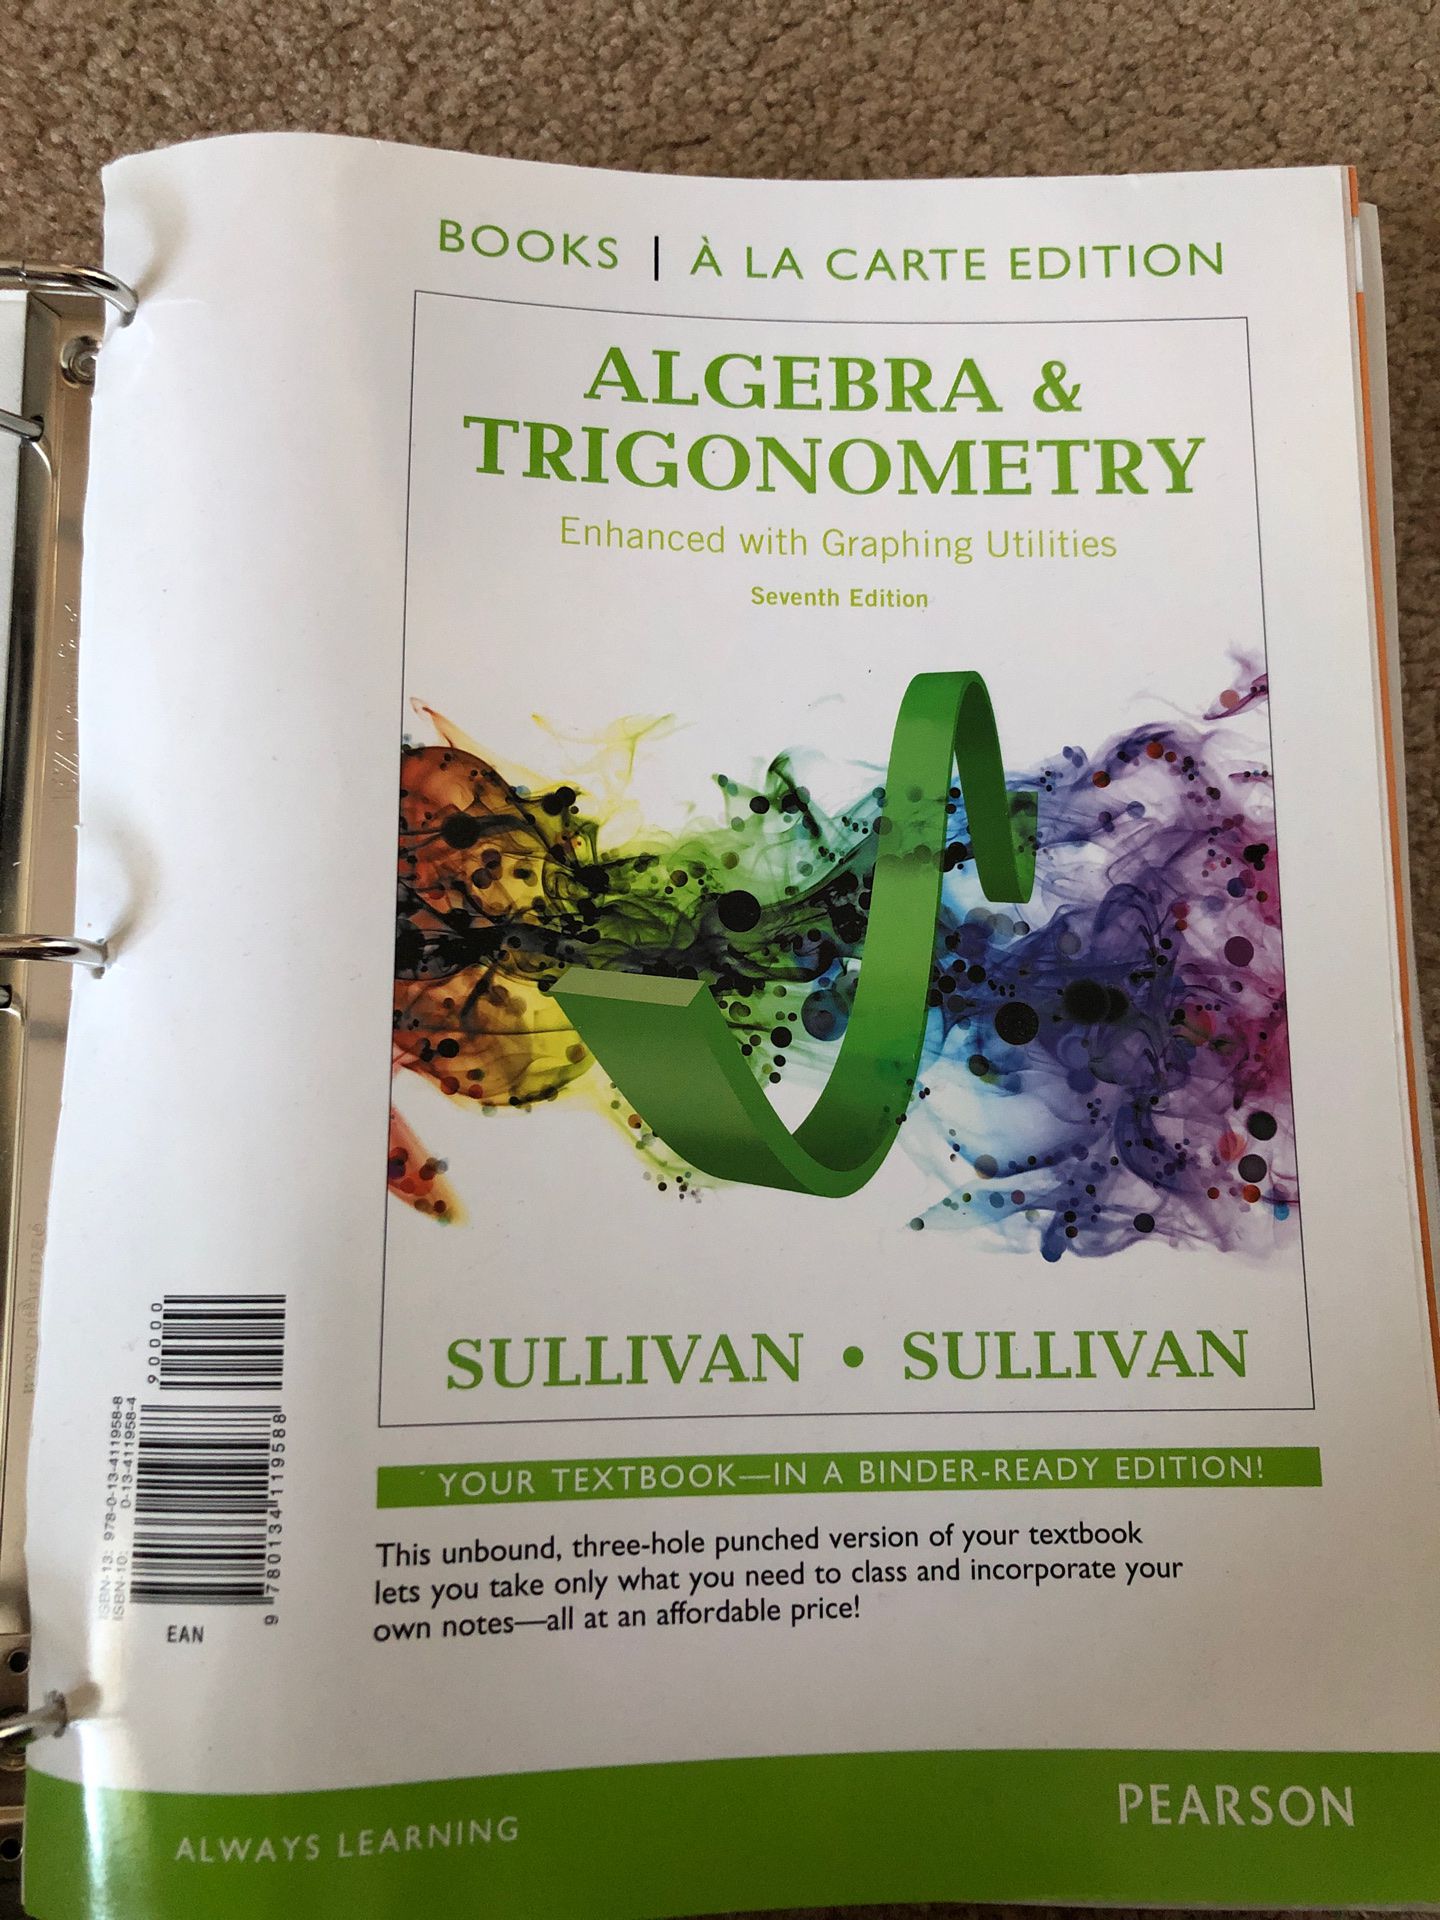 Algebra & Trigonometry 7th edition • SULLIVAN